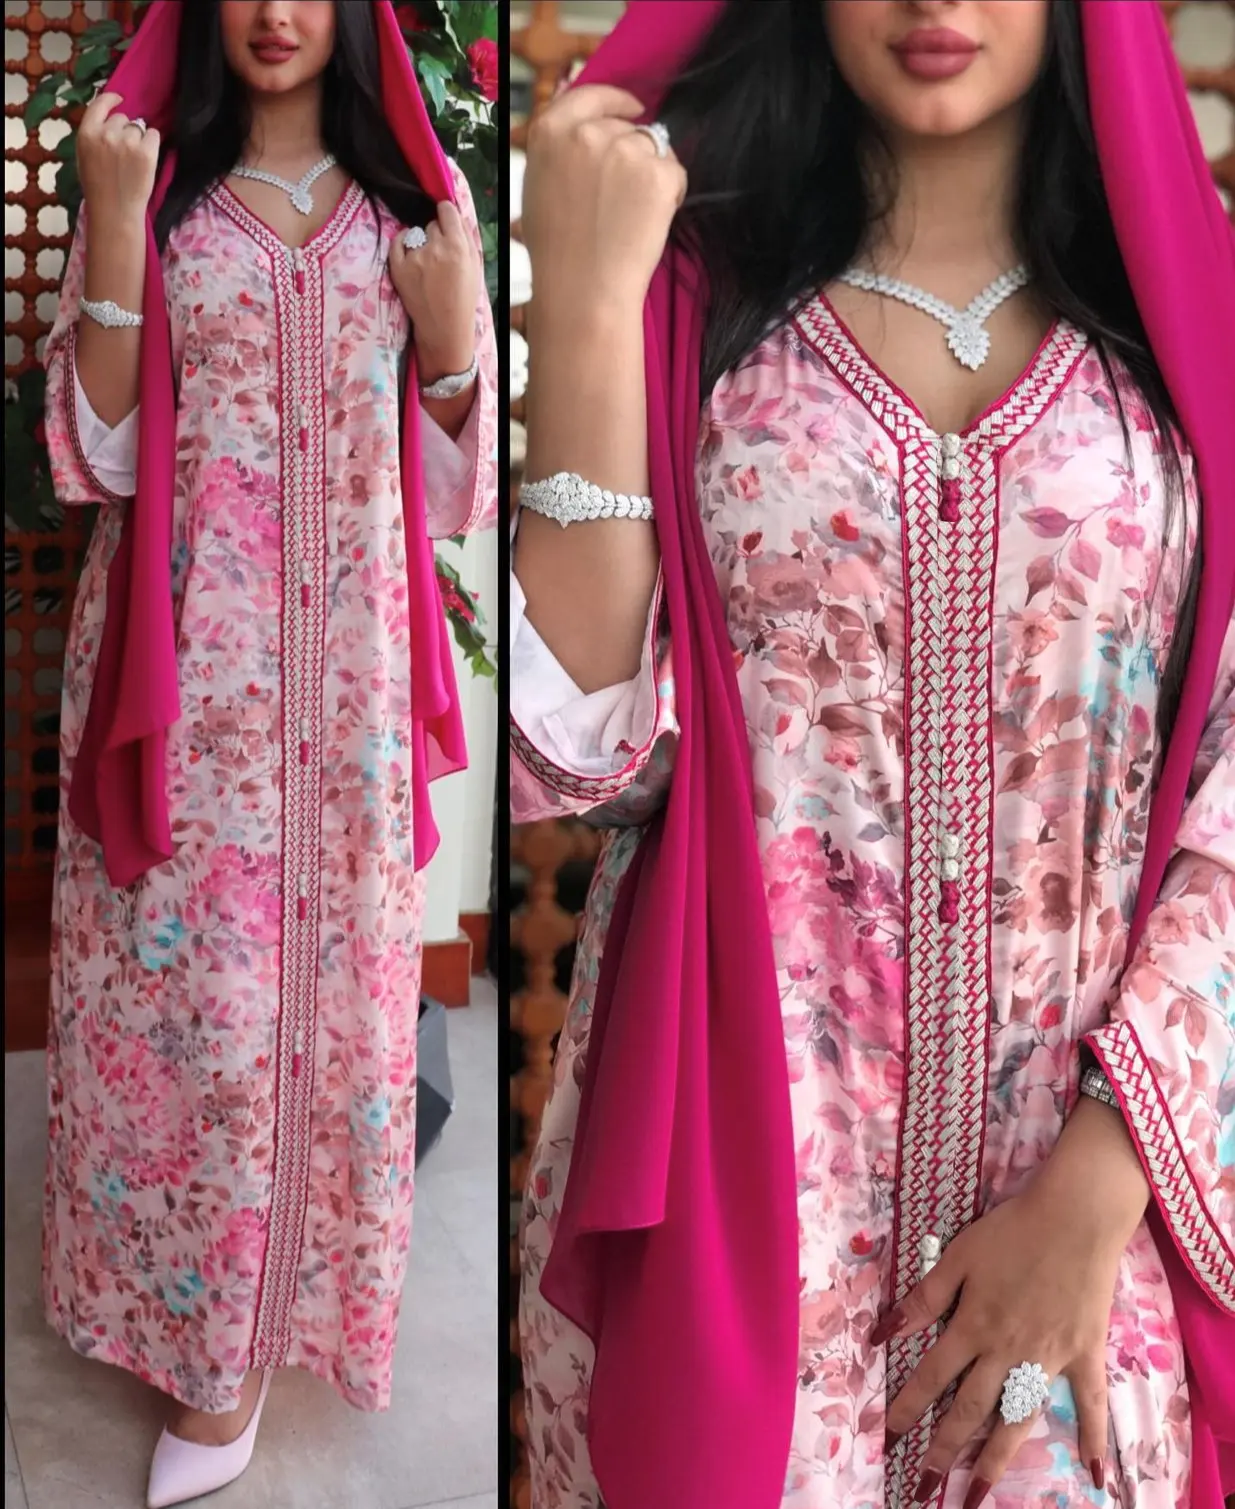 Wdxp134 Furui Gaun Panjang Wanita Arab, Gaun Panjang Arab Motif Floral Warna Pink Dubai